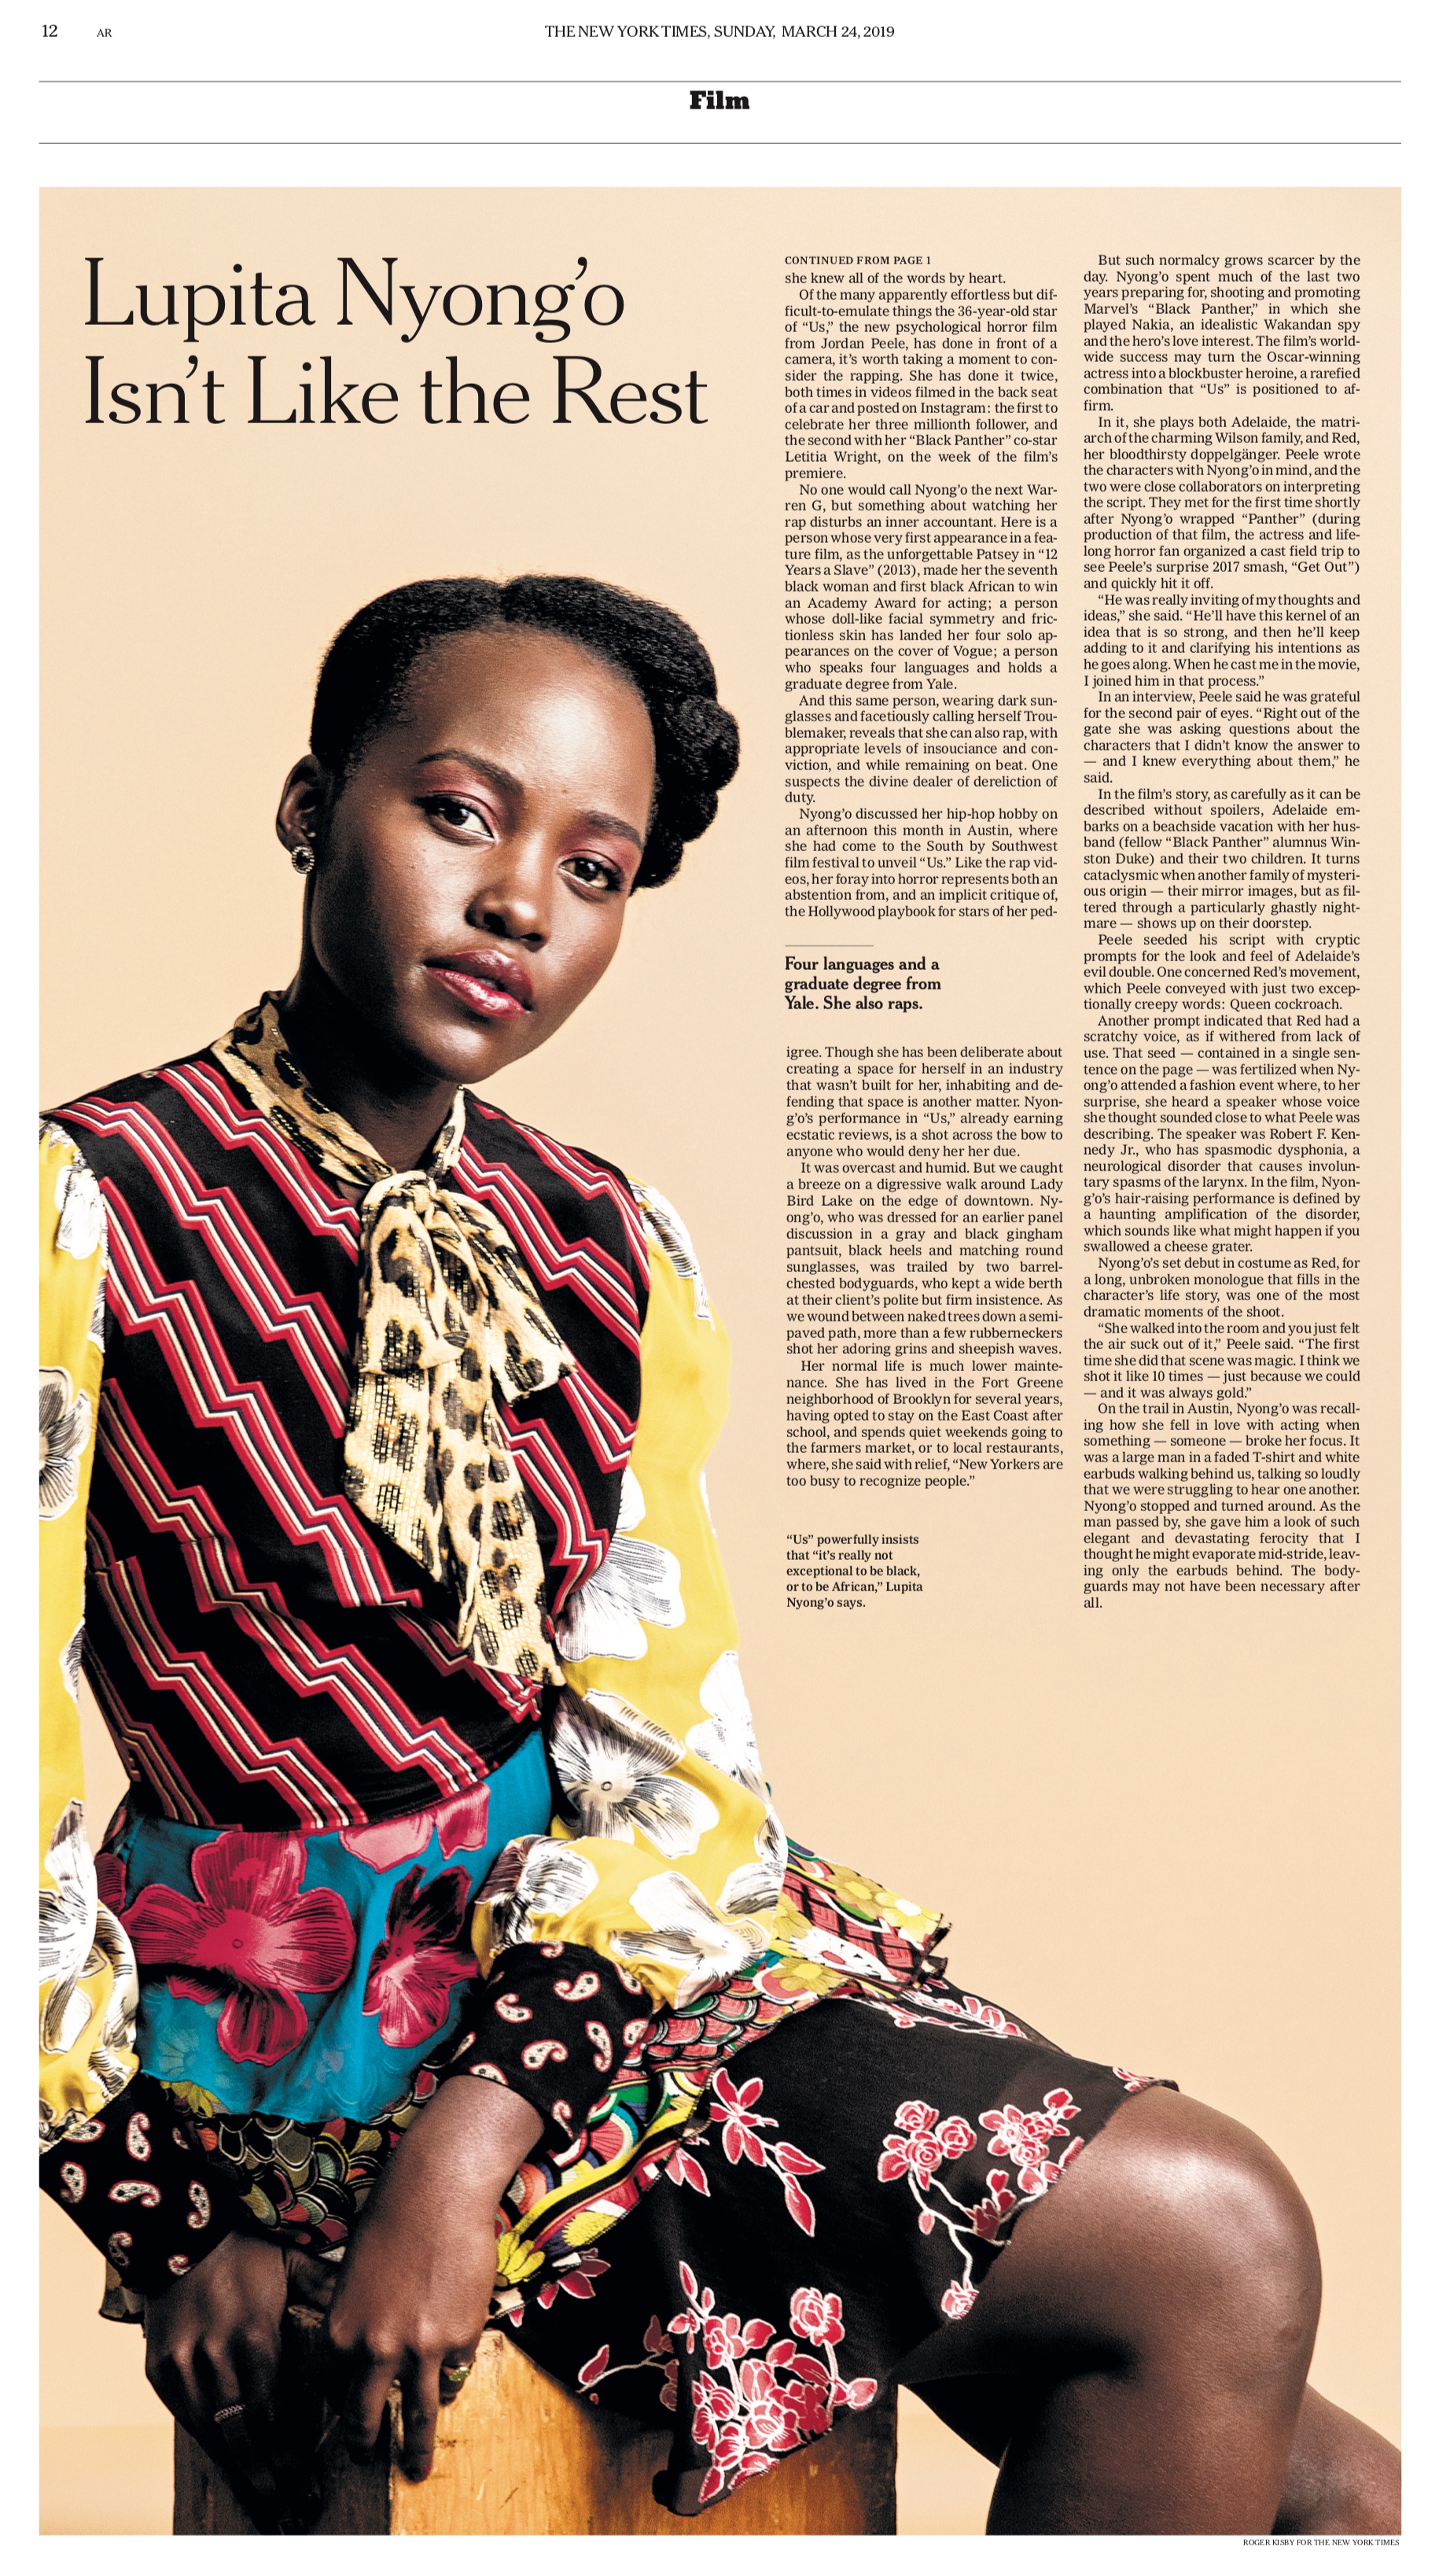  Lupita Nyong'o for  The New York Times 